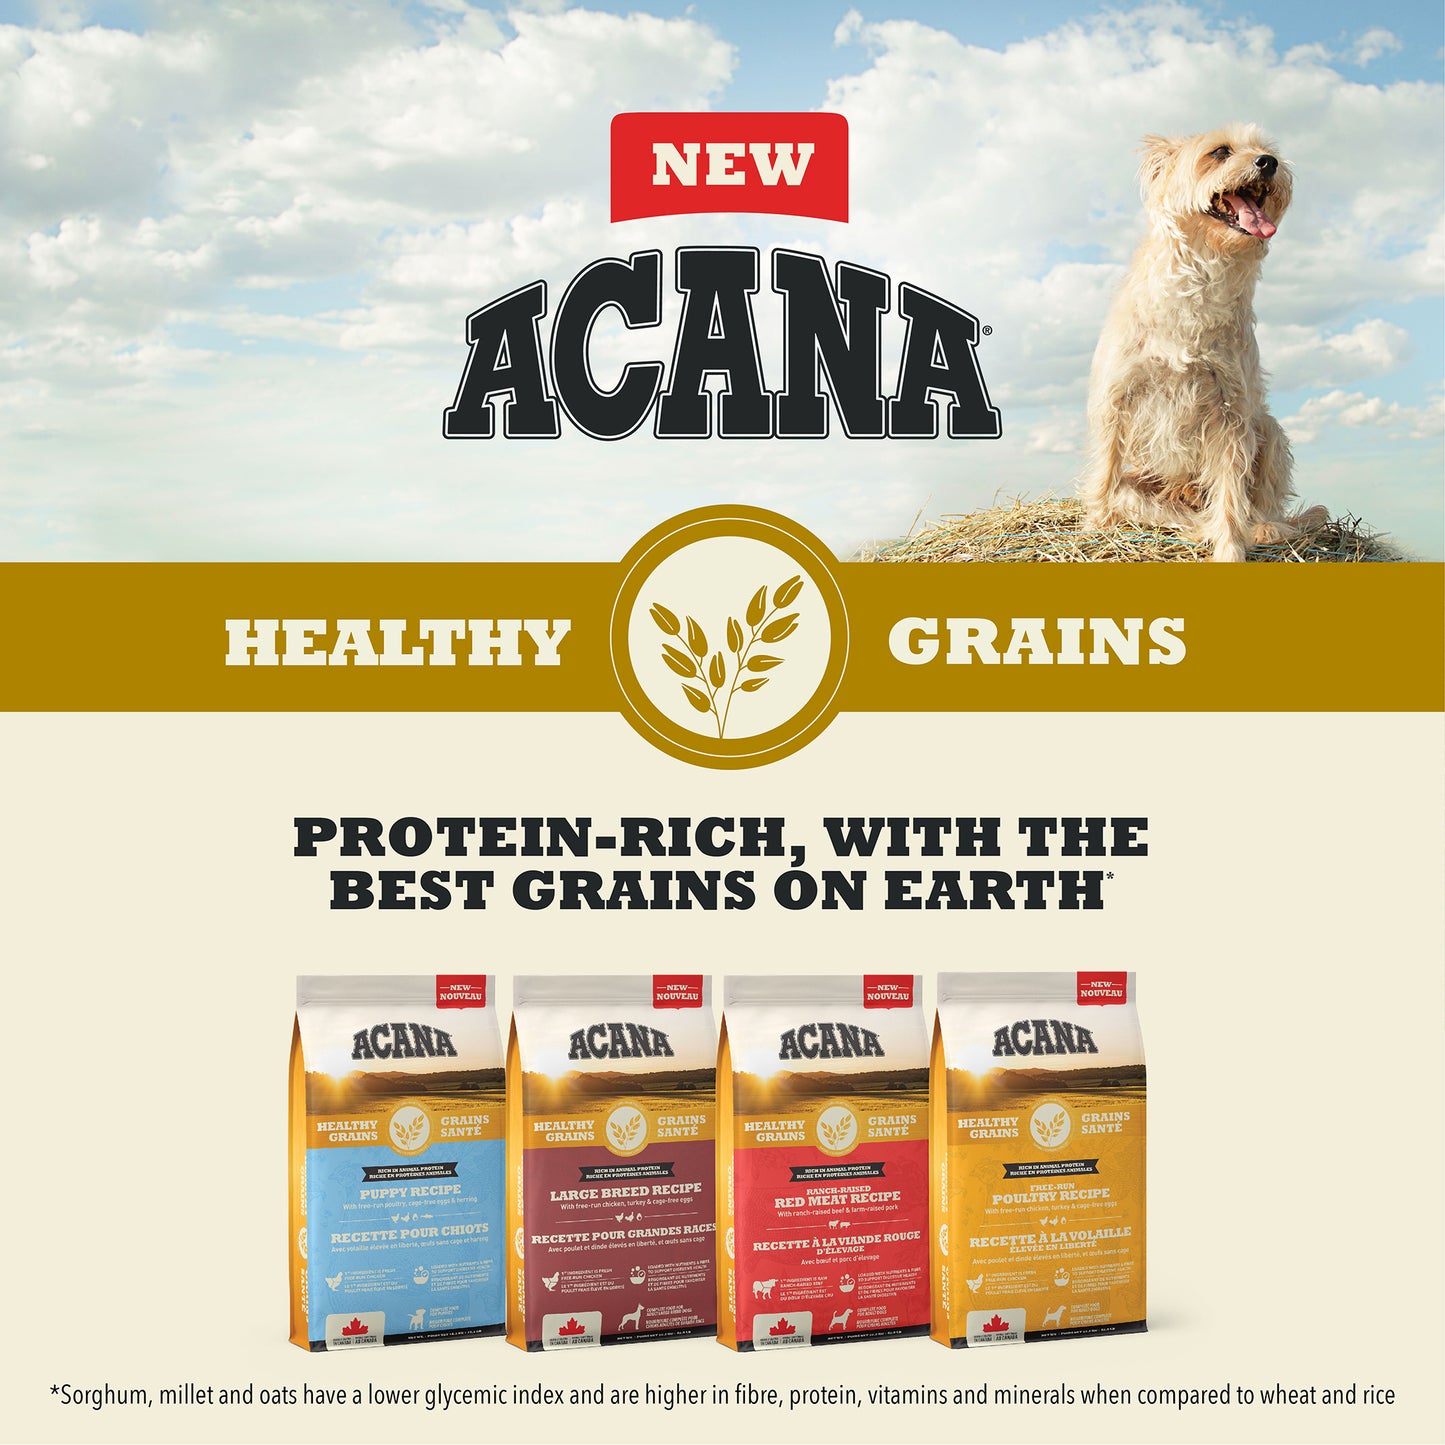 ACANA® HEALTHY GRAINS Free-Run Poultry Recipe